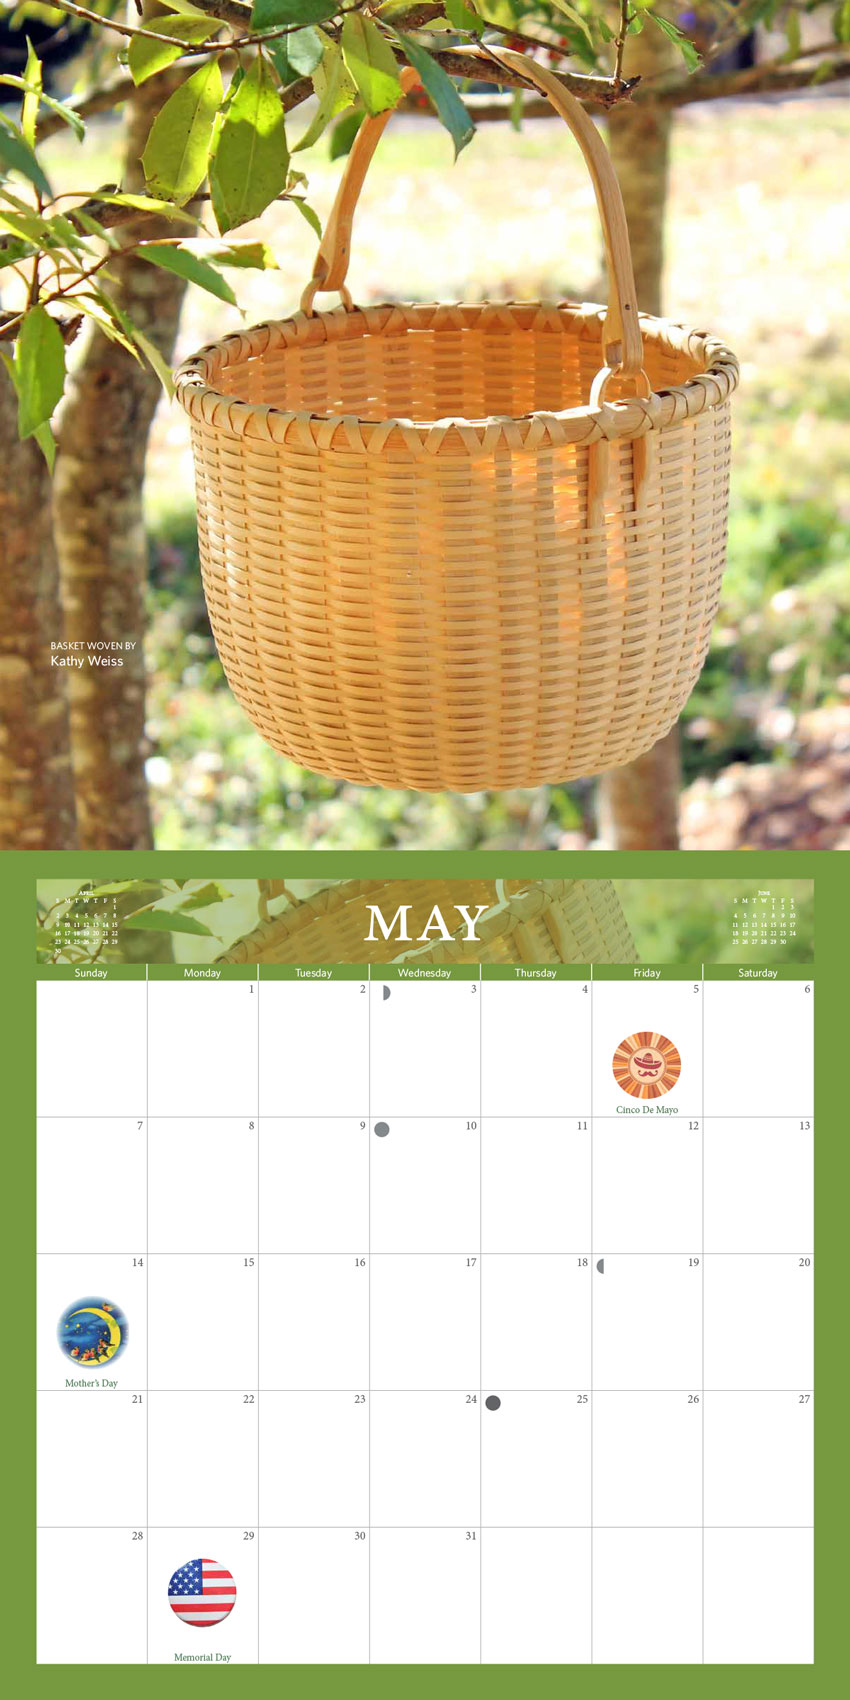 May’s Calendar Girl: Miss Kathy